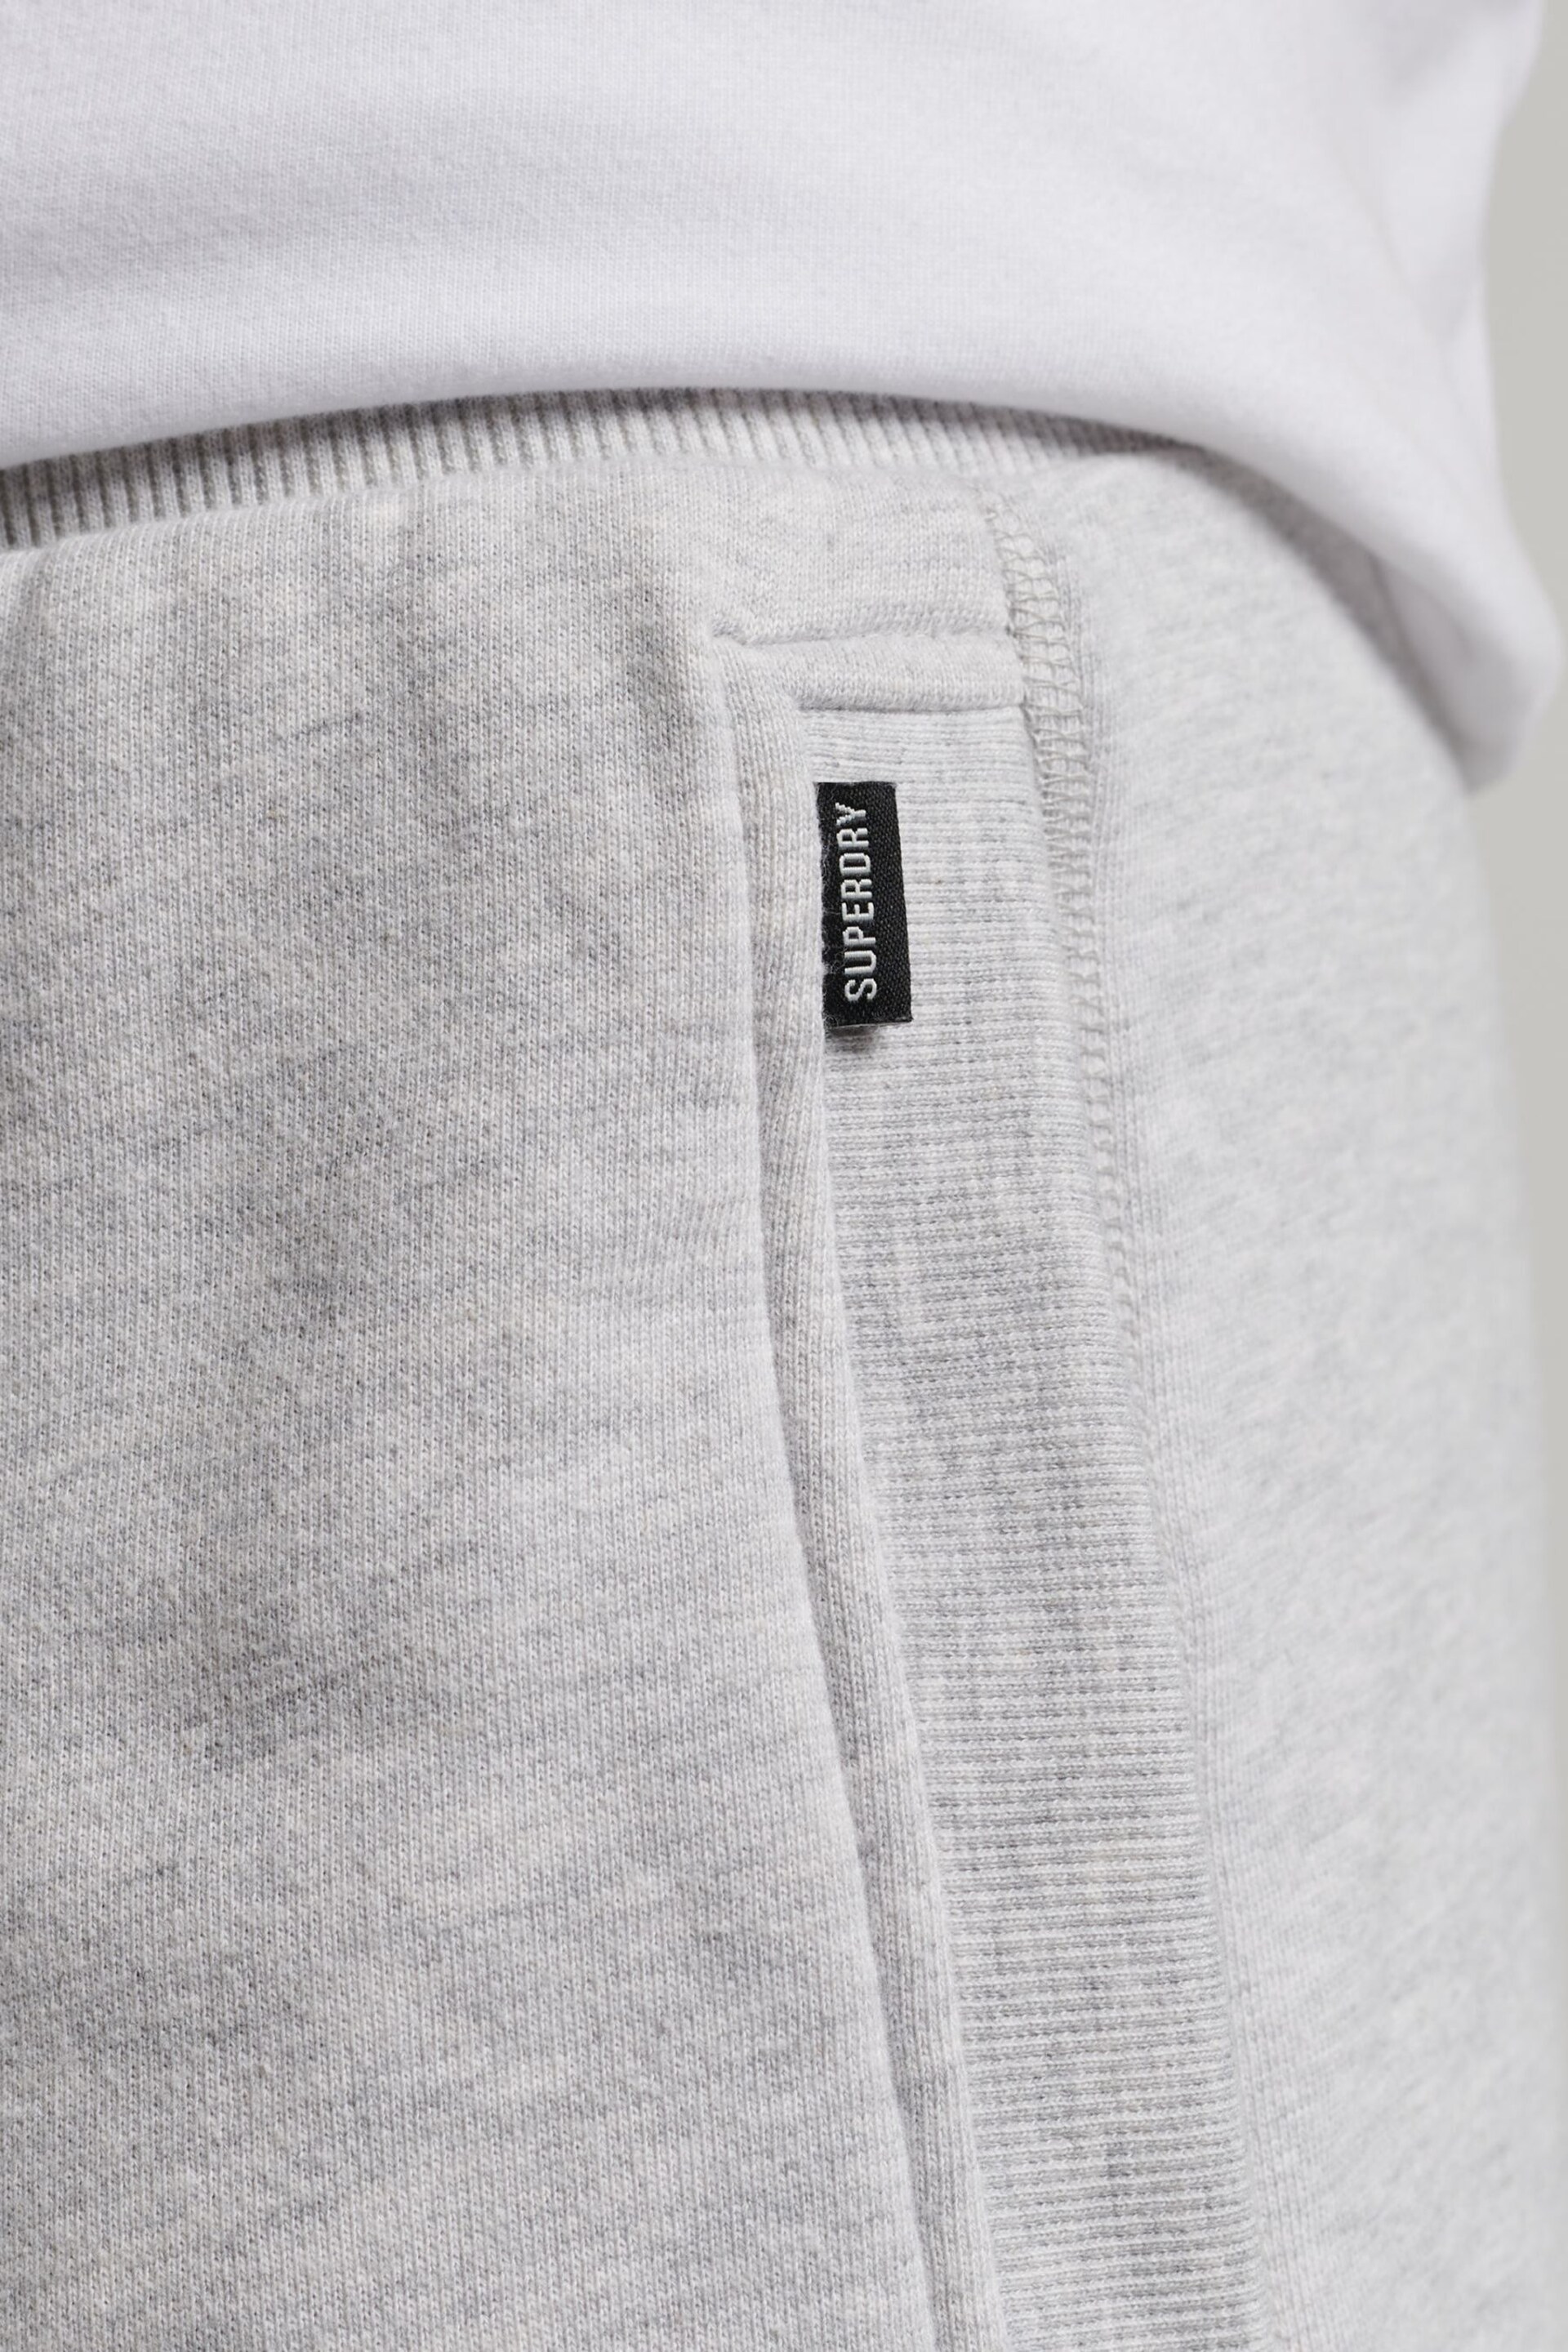 Superdry Light Grey Vintage Logo Embroidered Jersey Shorts - Image 6 of 8